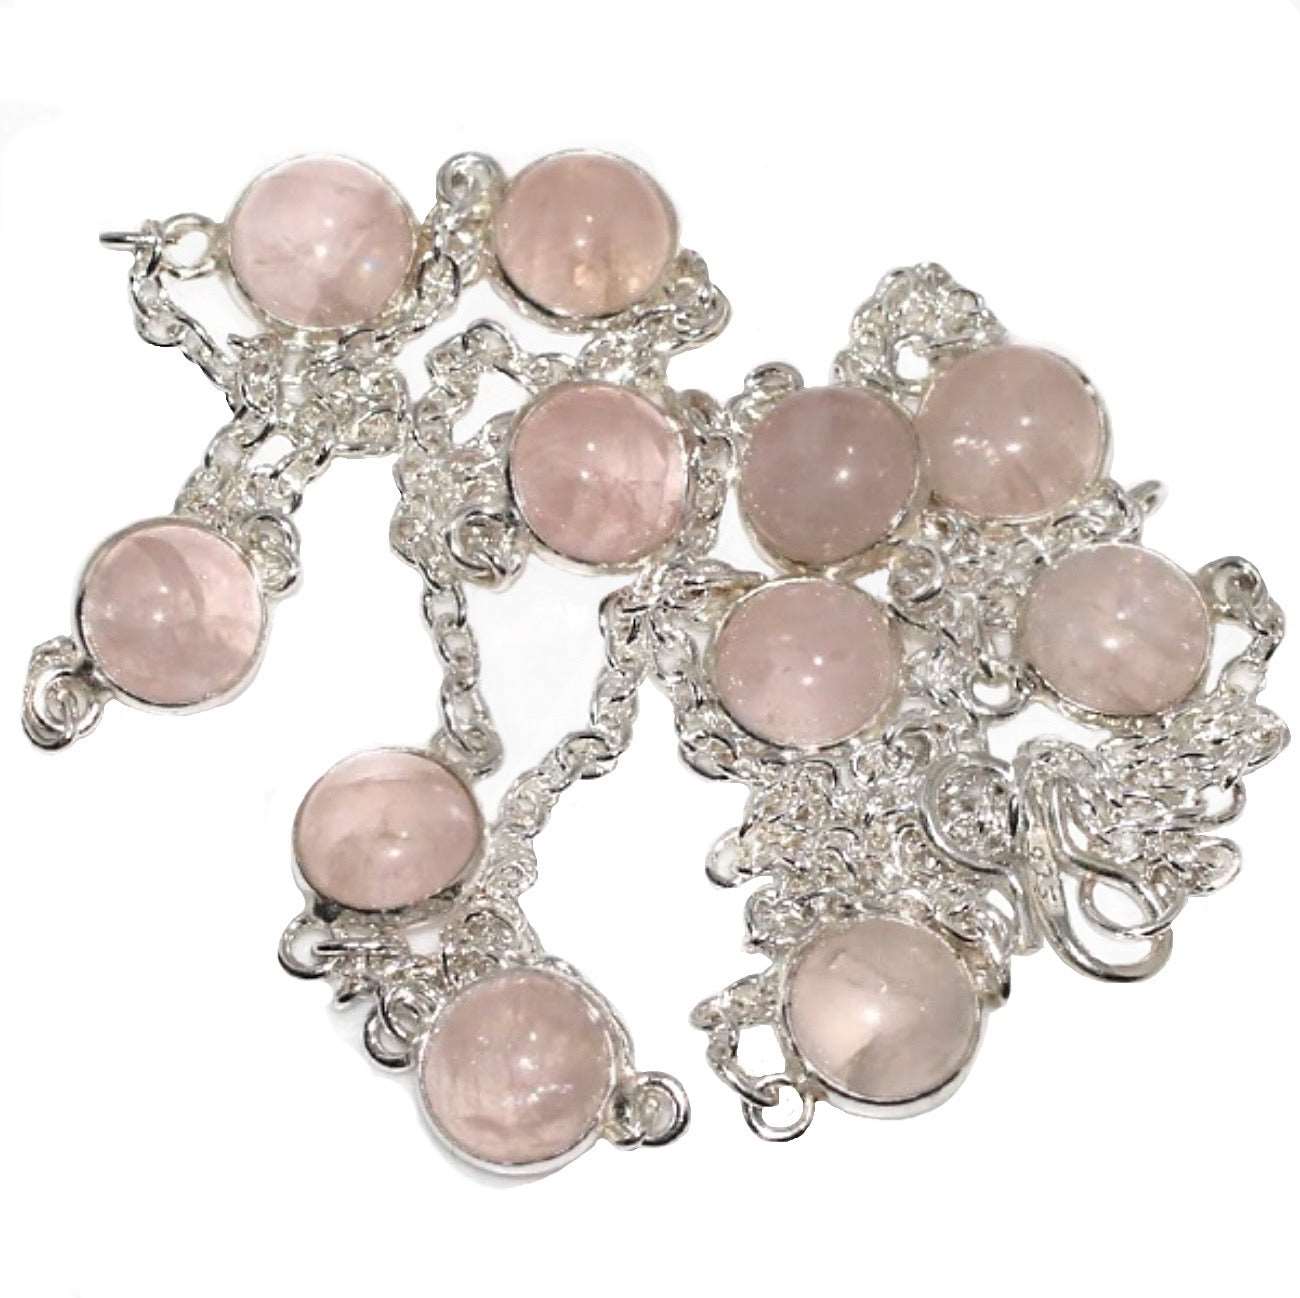 70 cm Long Natural Rose Quartz Gemstone Necklace in .925 Sterling Silver